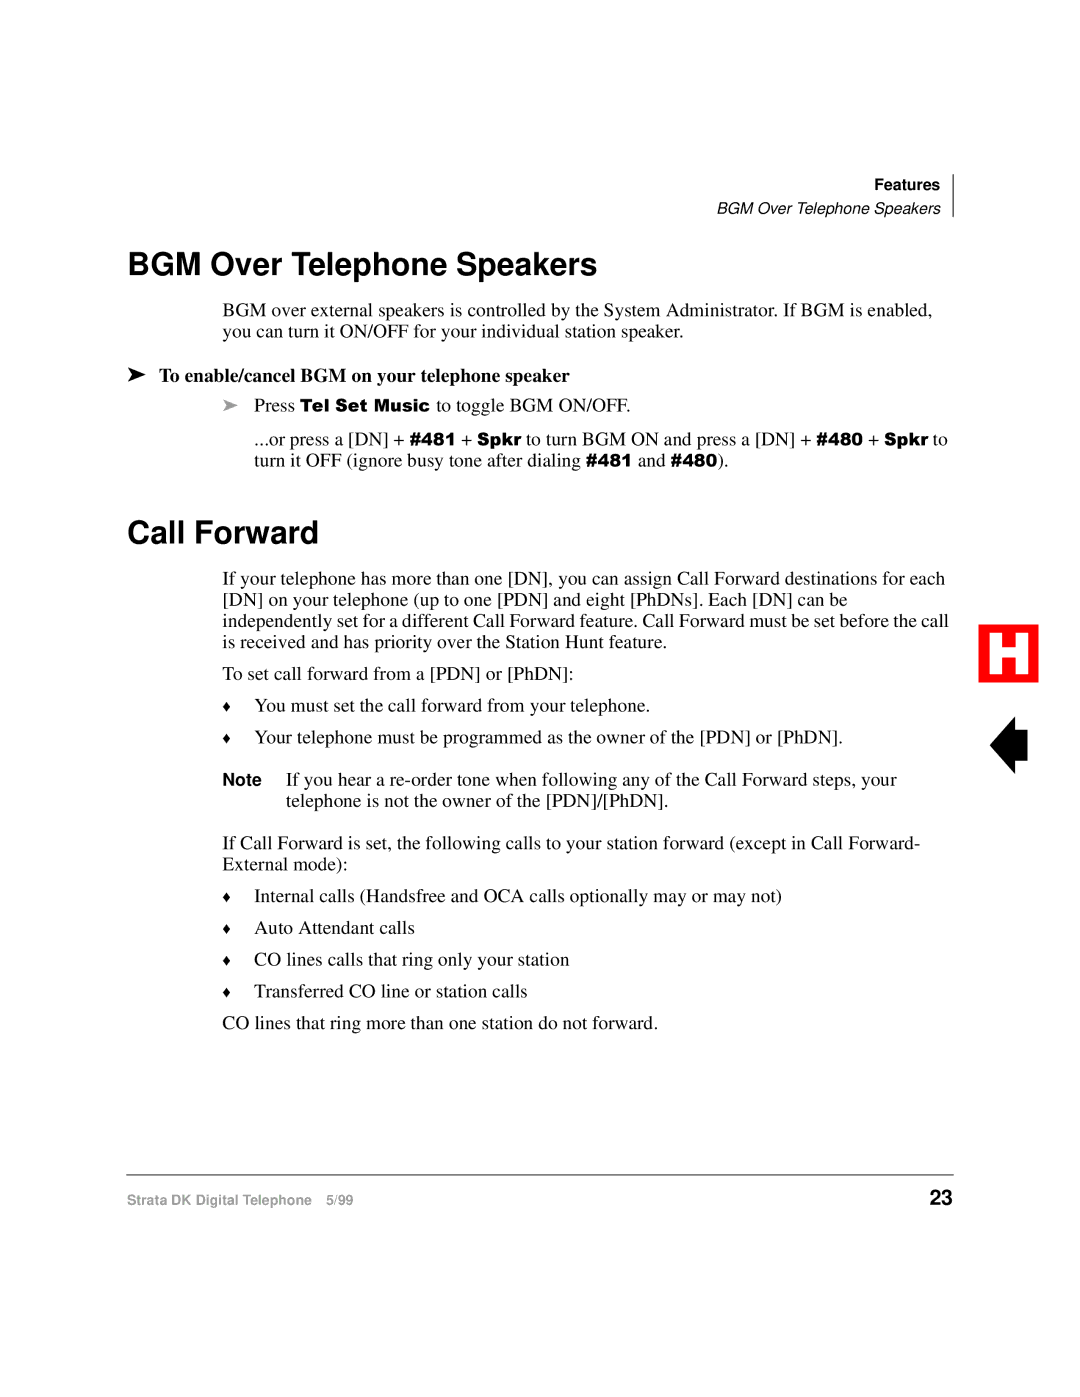 Toshiba Digital Telephone manual BGM Over Telephone Speakers, Call Forward, To enable/cancel BGM on your telephone speaker 